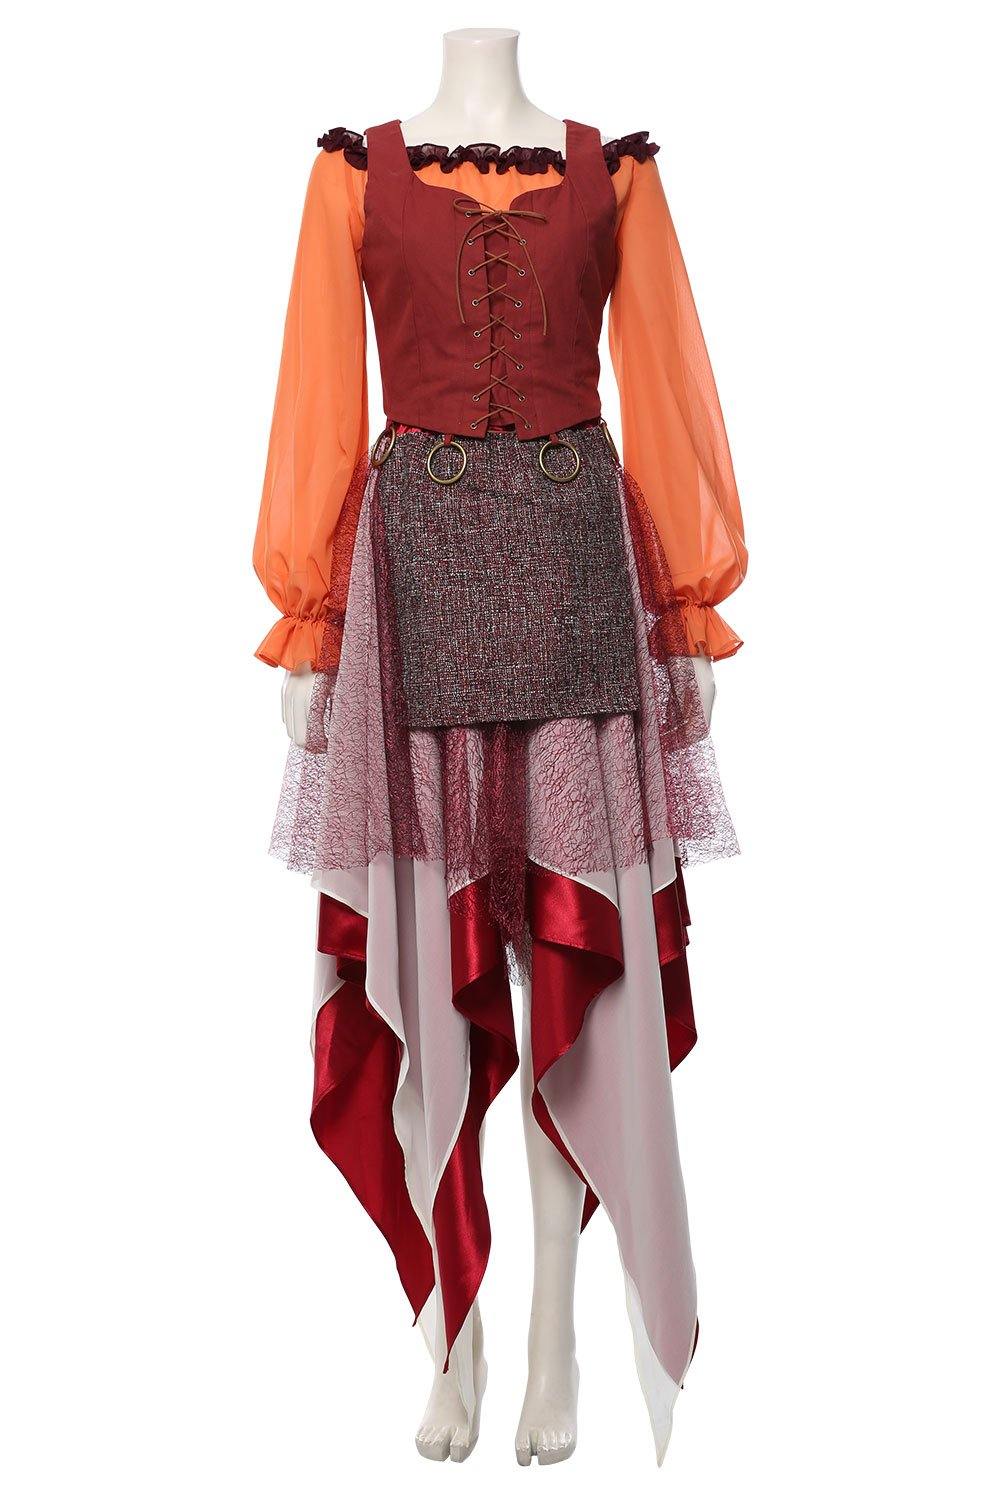 Hocus Pocus Mary Sanderson Horror Film Cosplay Kostüm Mittelalter Kostüm - cosplaycartde